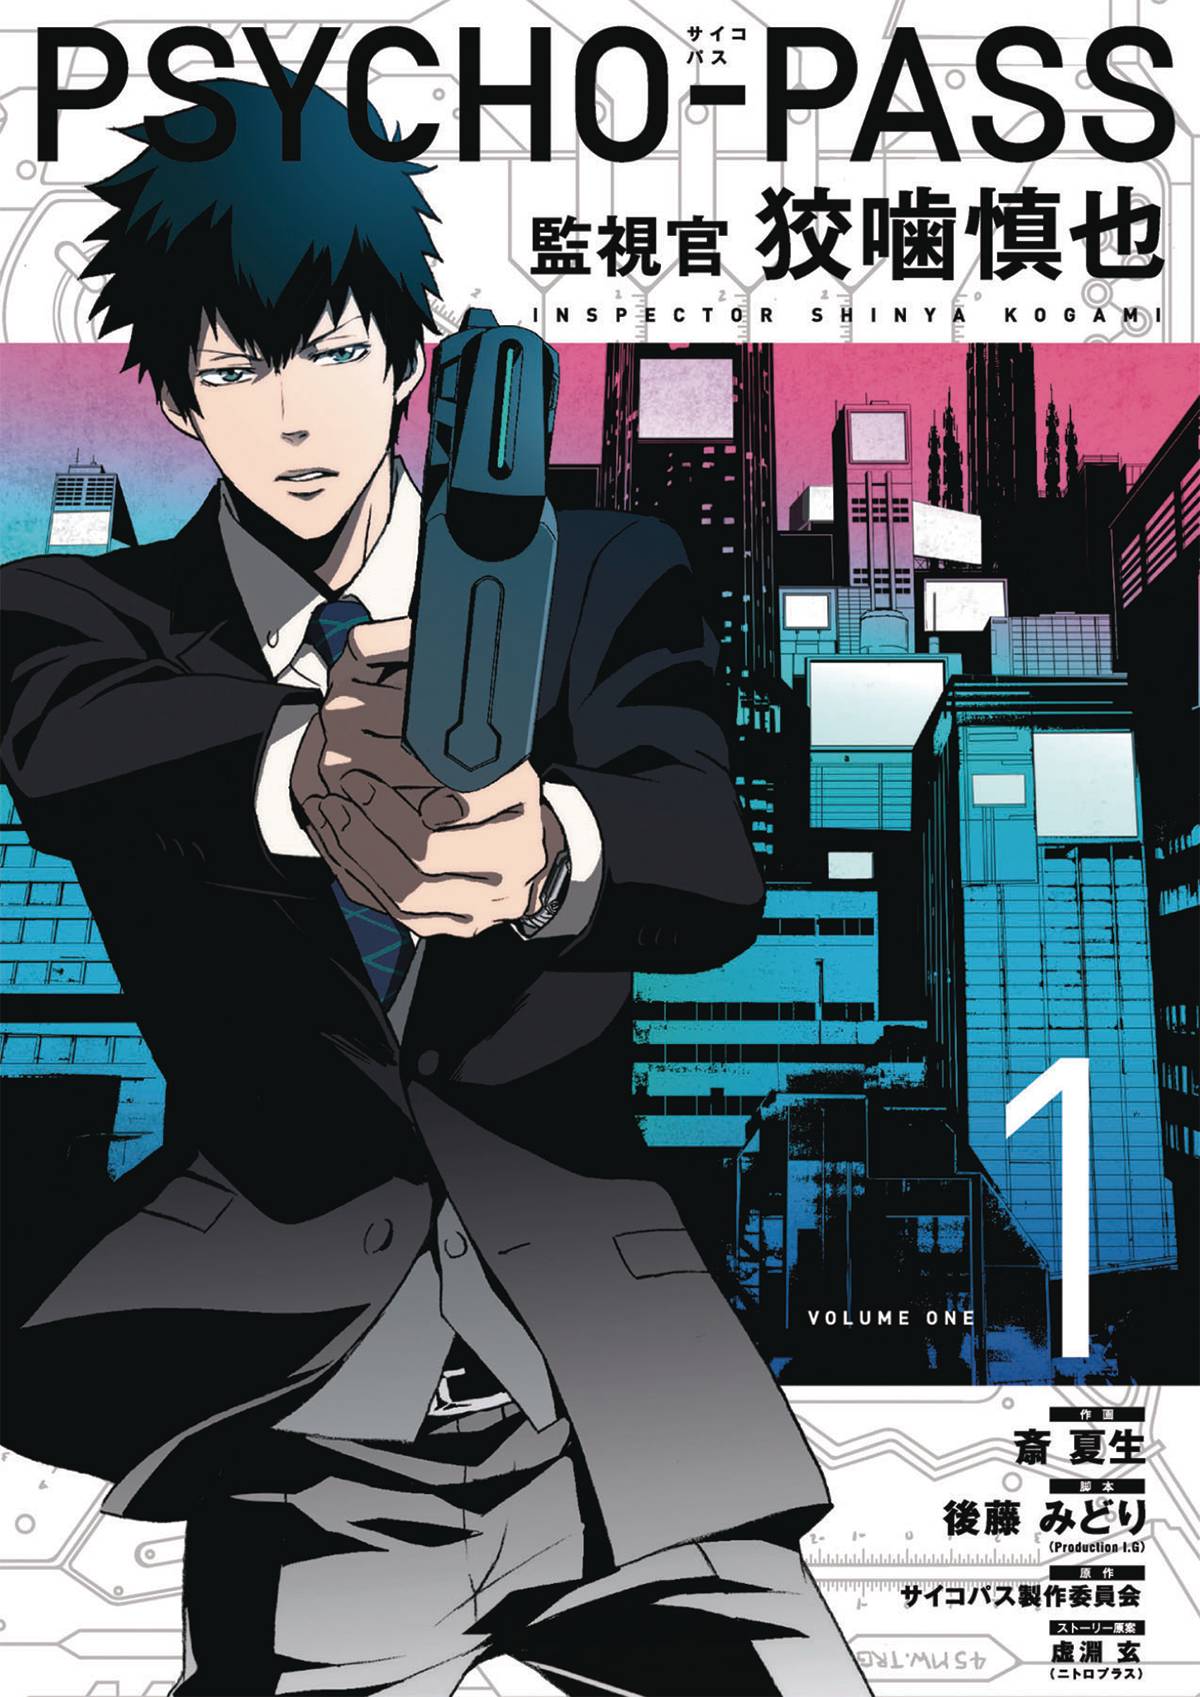 Psycho Pass Inspector Shinya Kogami Graphic Novel Volume 1